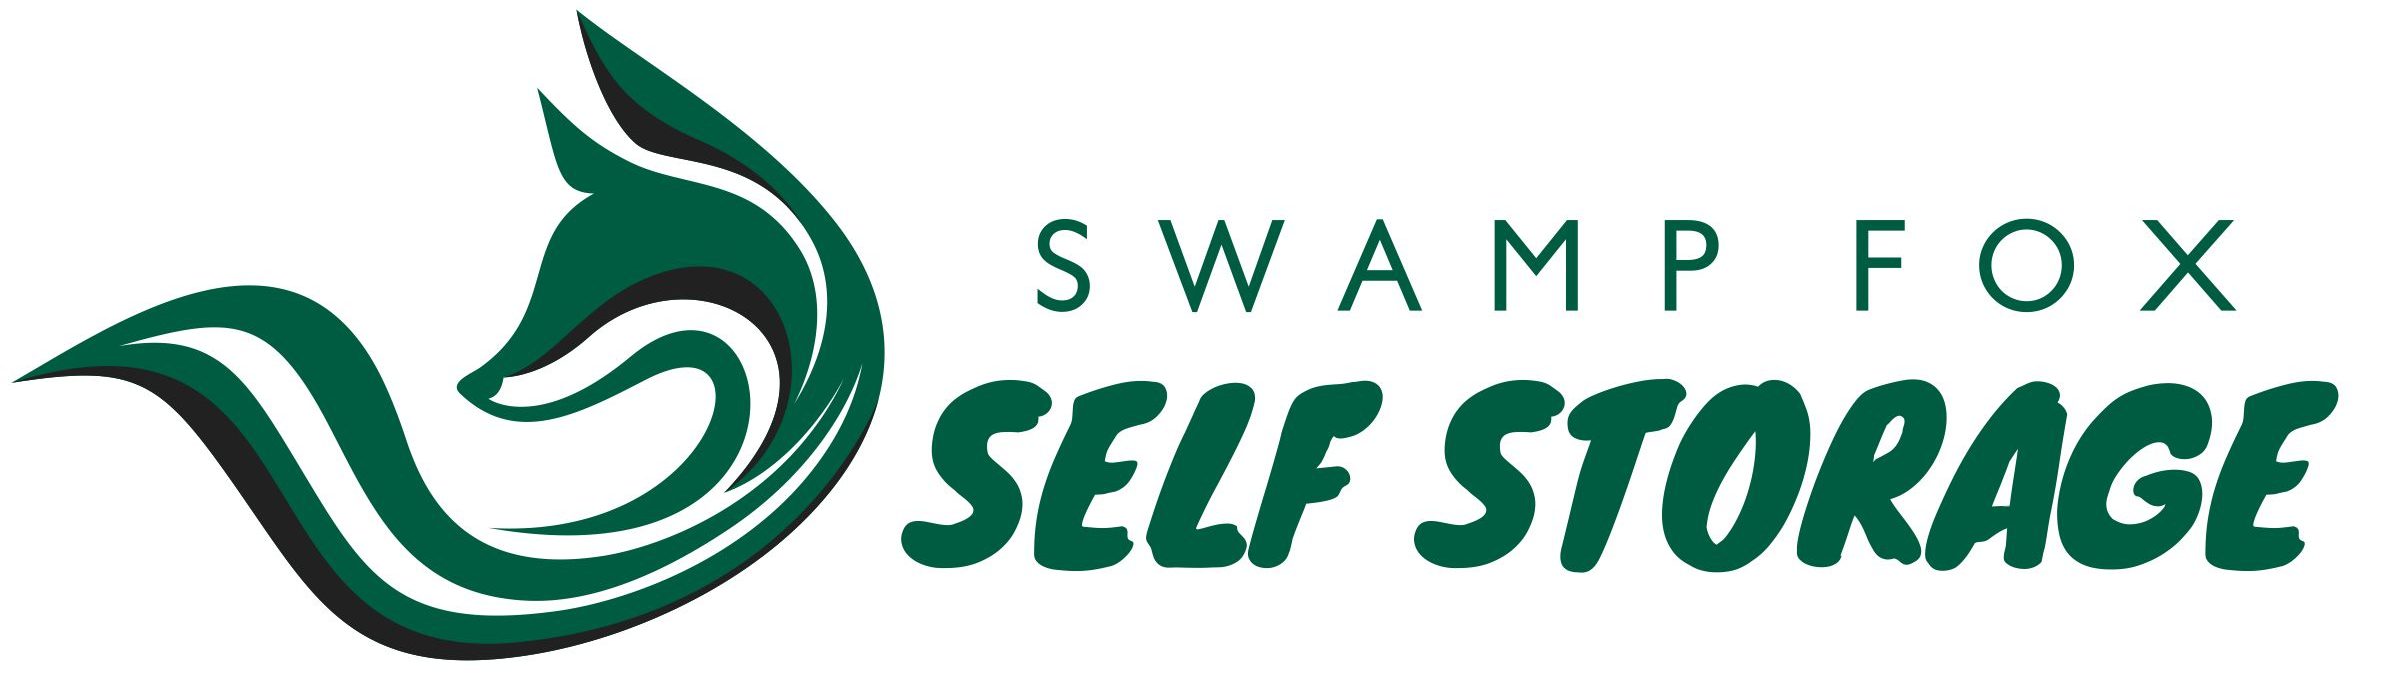 Swamp Fox Self Storage